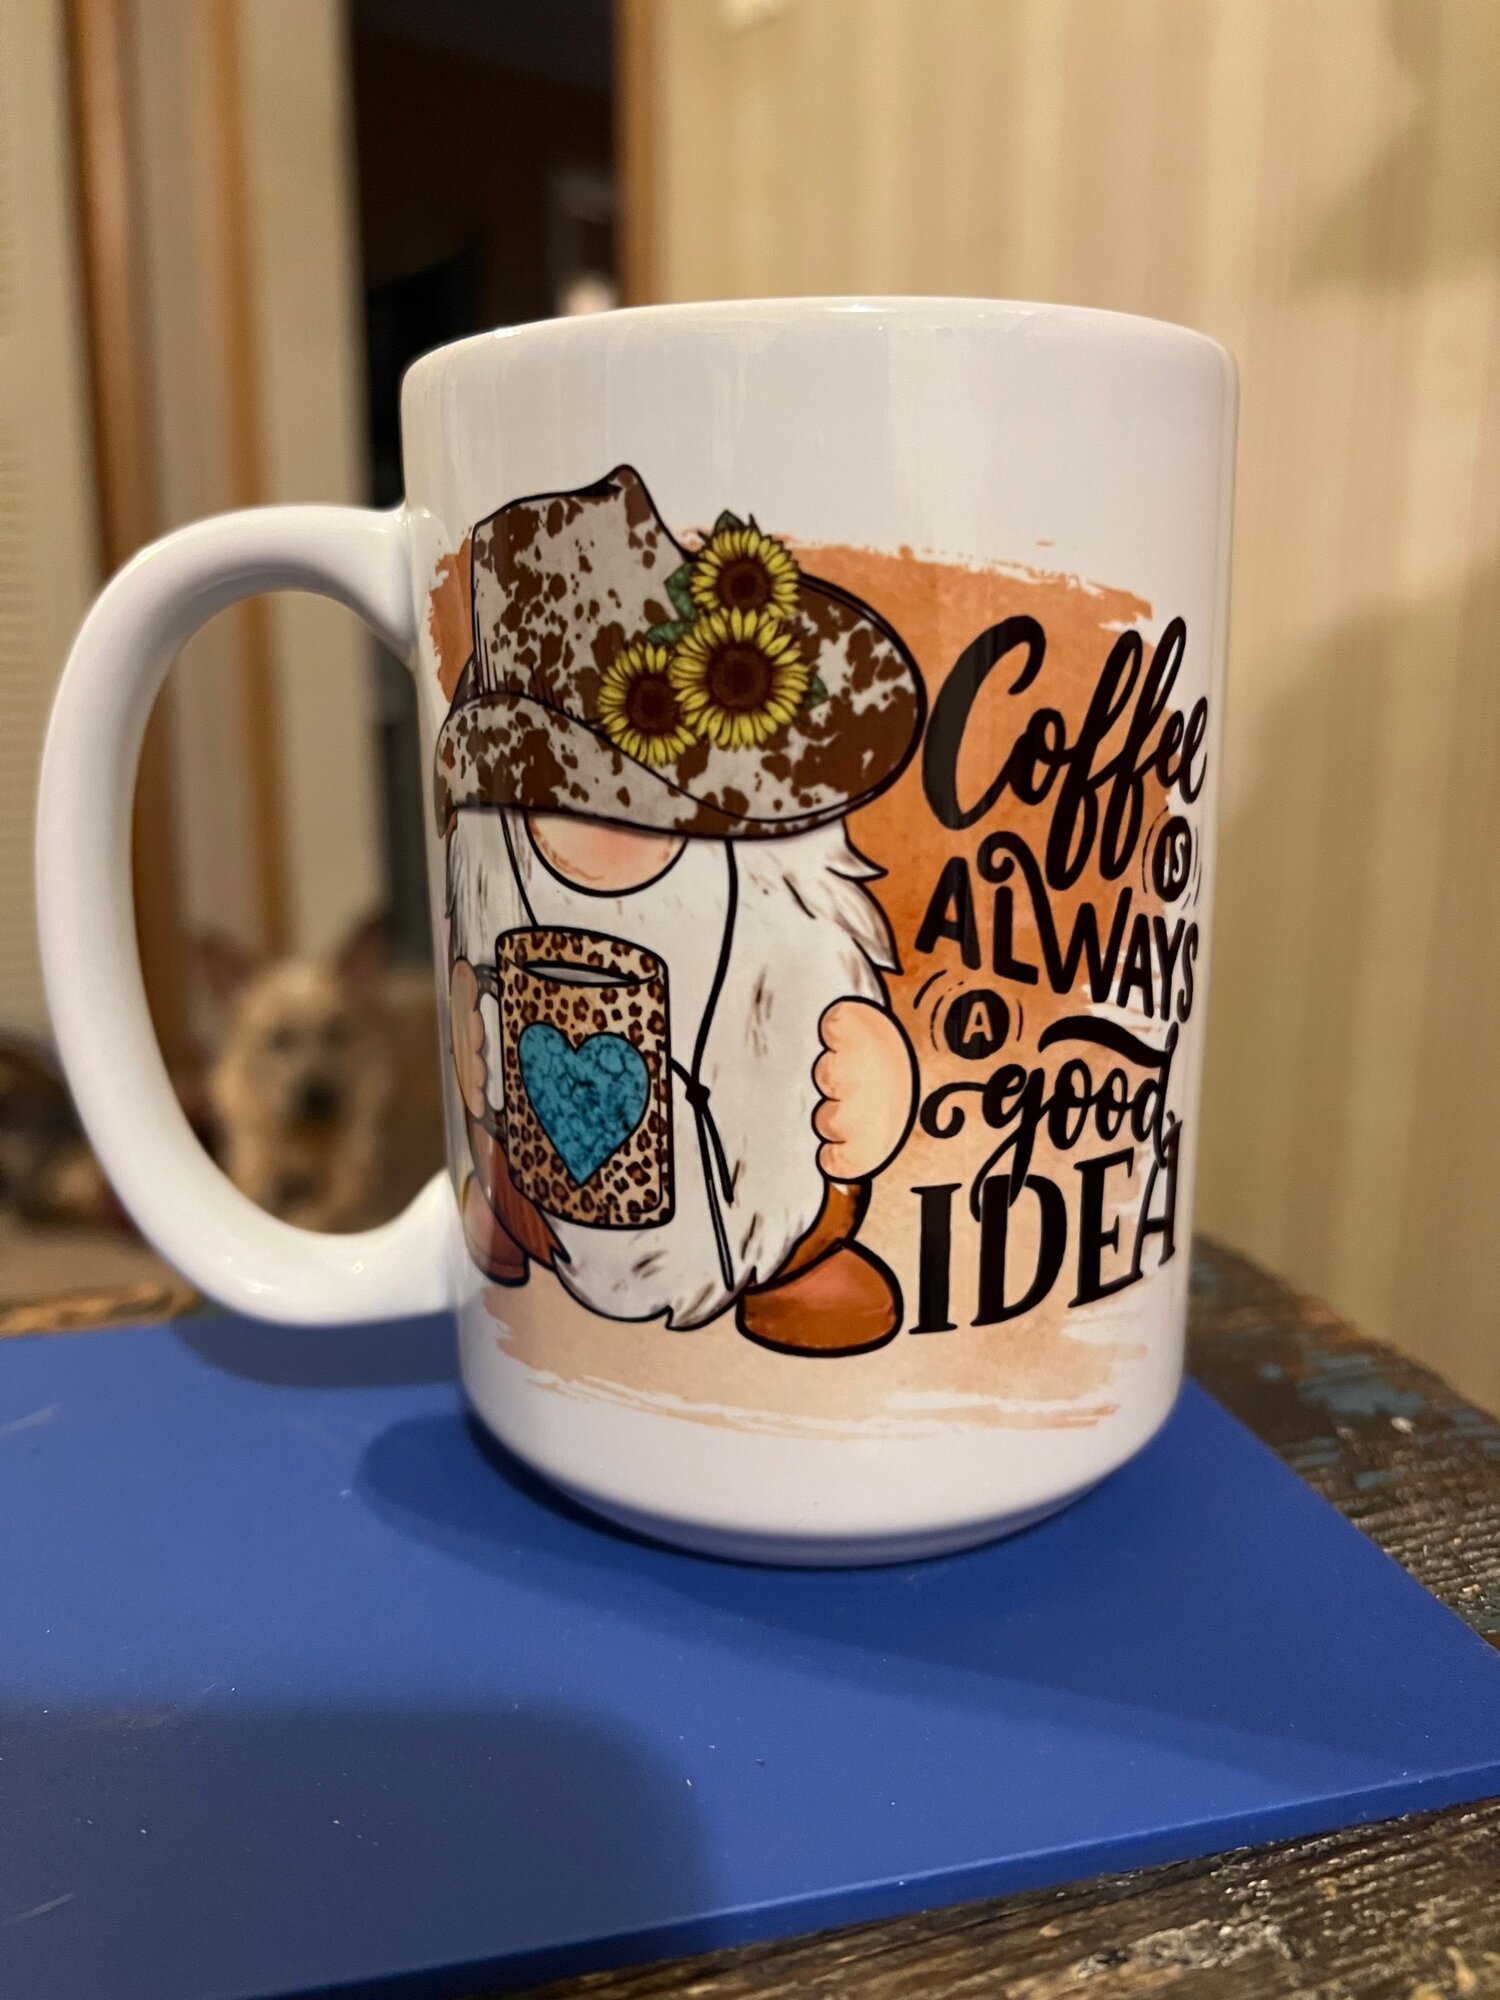 15 Cool cups ideas  mugs, coffee cups, cups and mugs